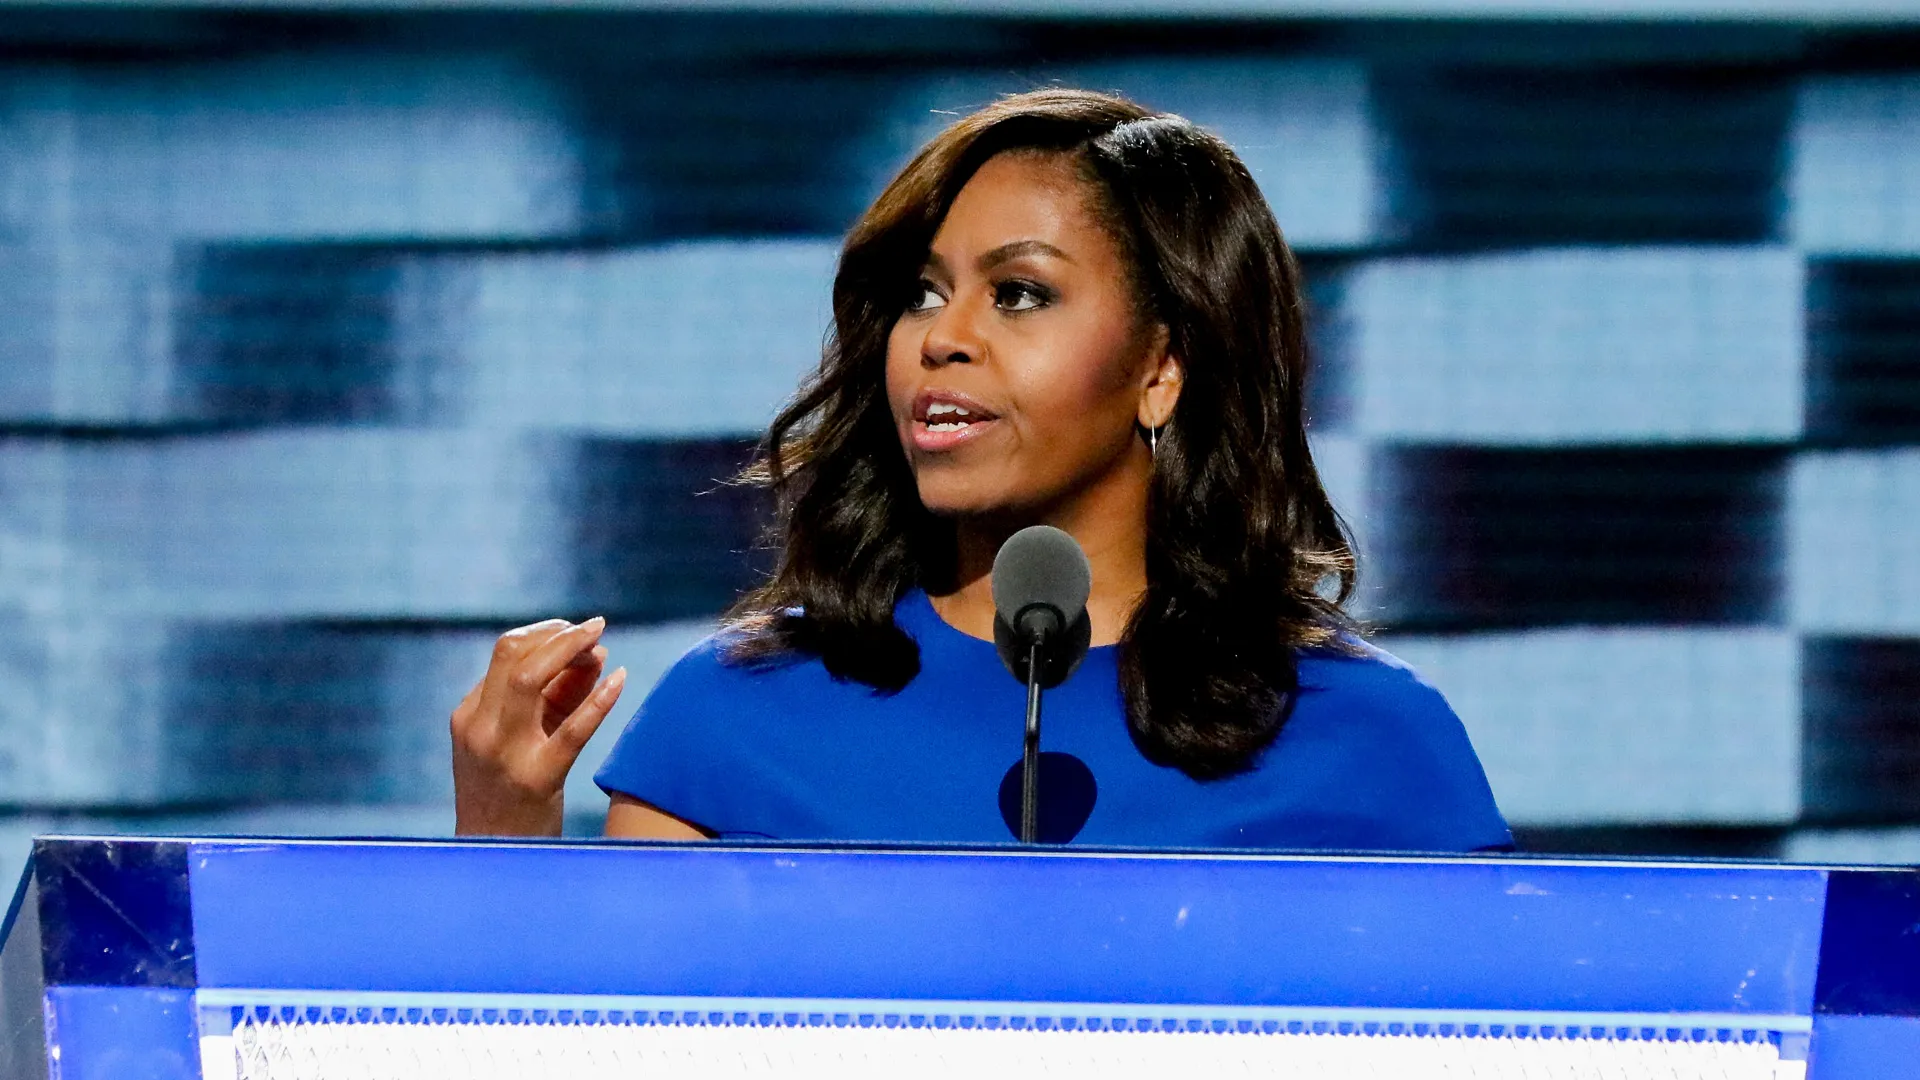 Michelle Obama on the campaign trail